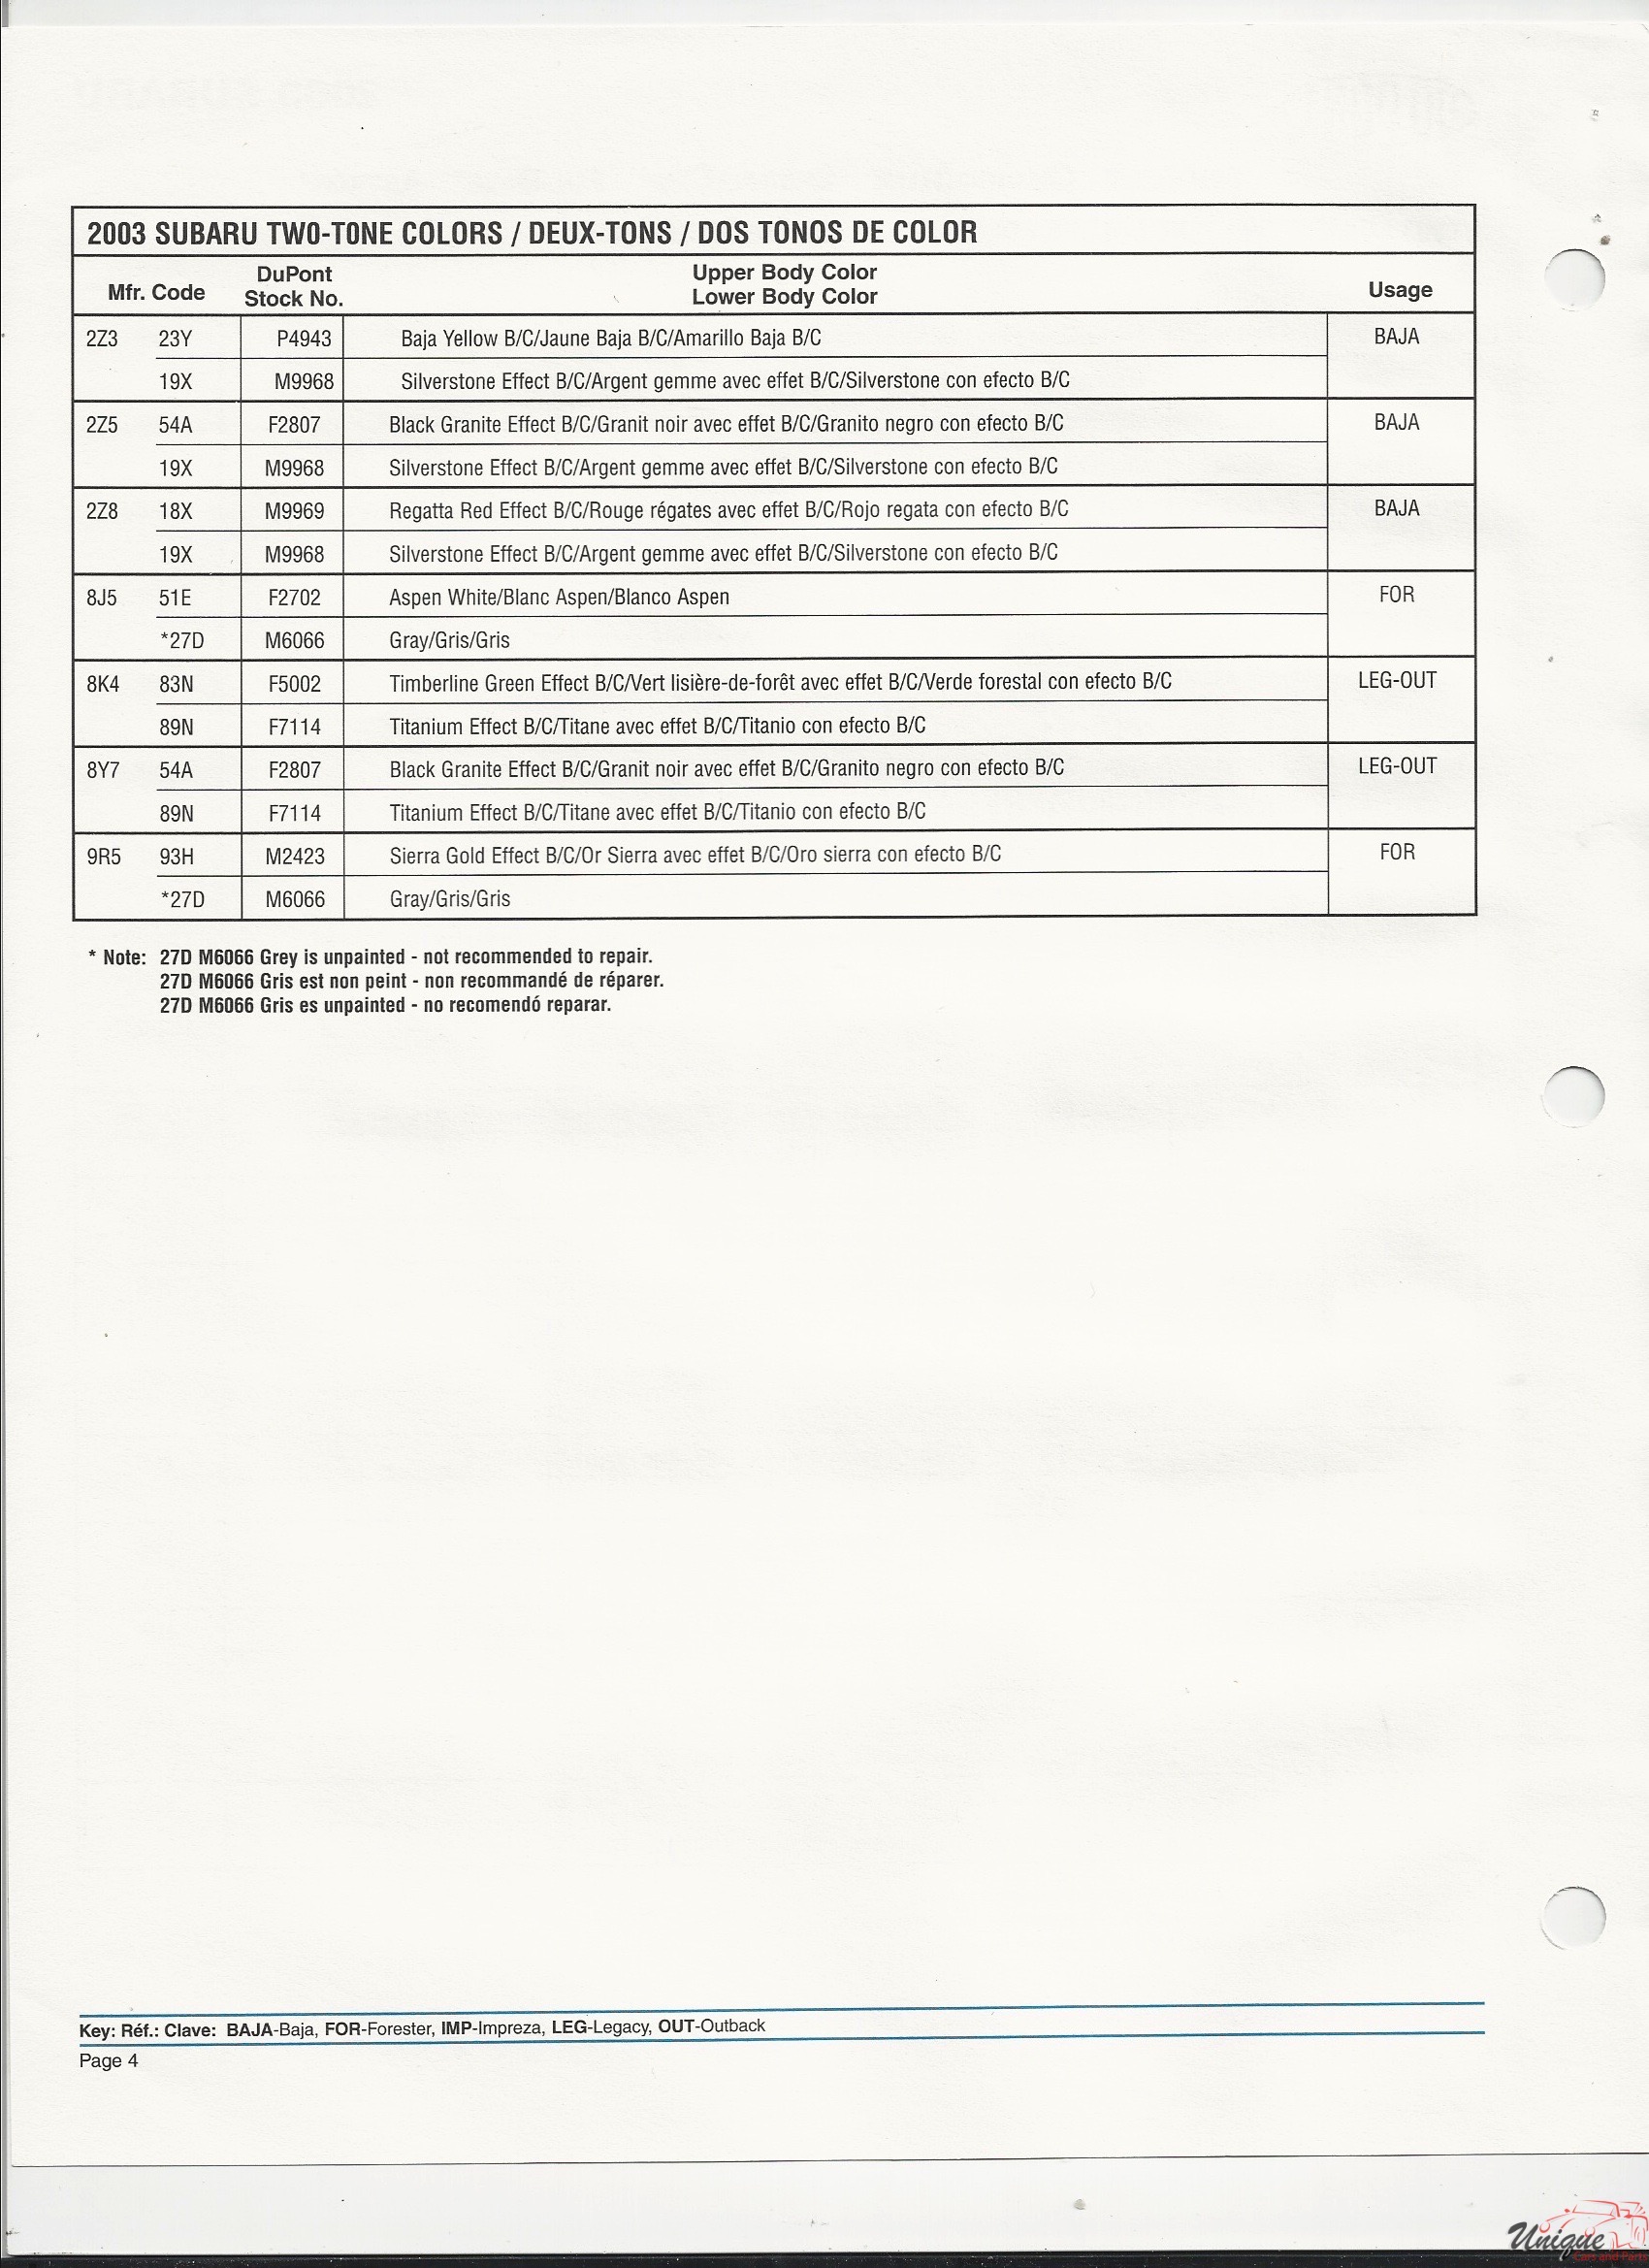 2003 Subaru Page 4 Paint Charts